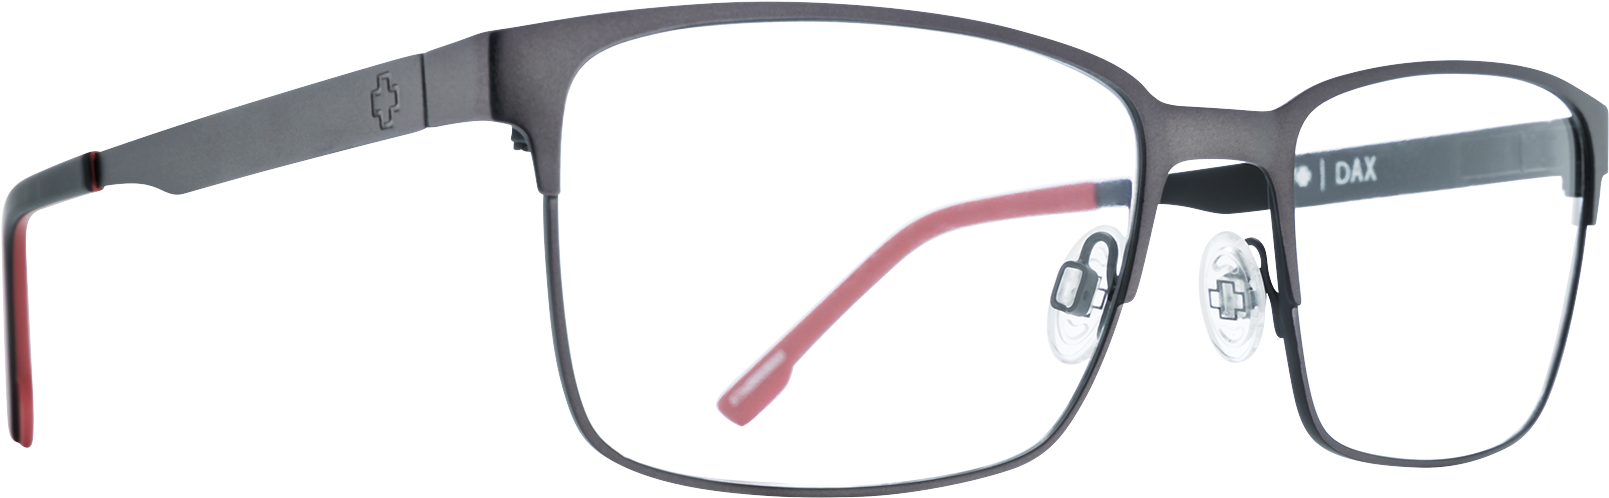 Spy Dax Eyeglasses, Hd Png Download